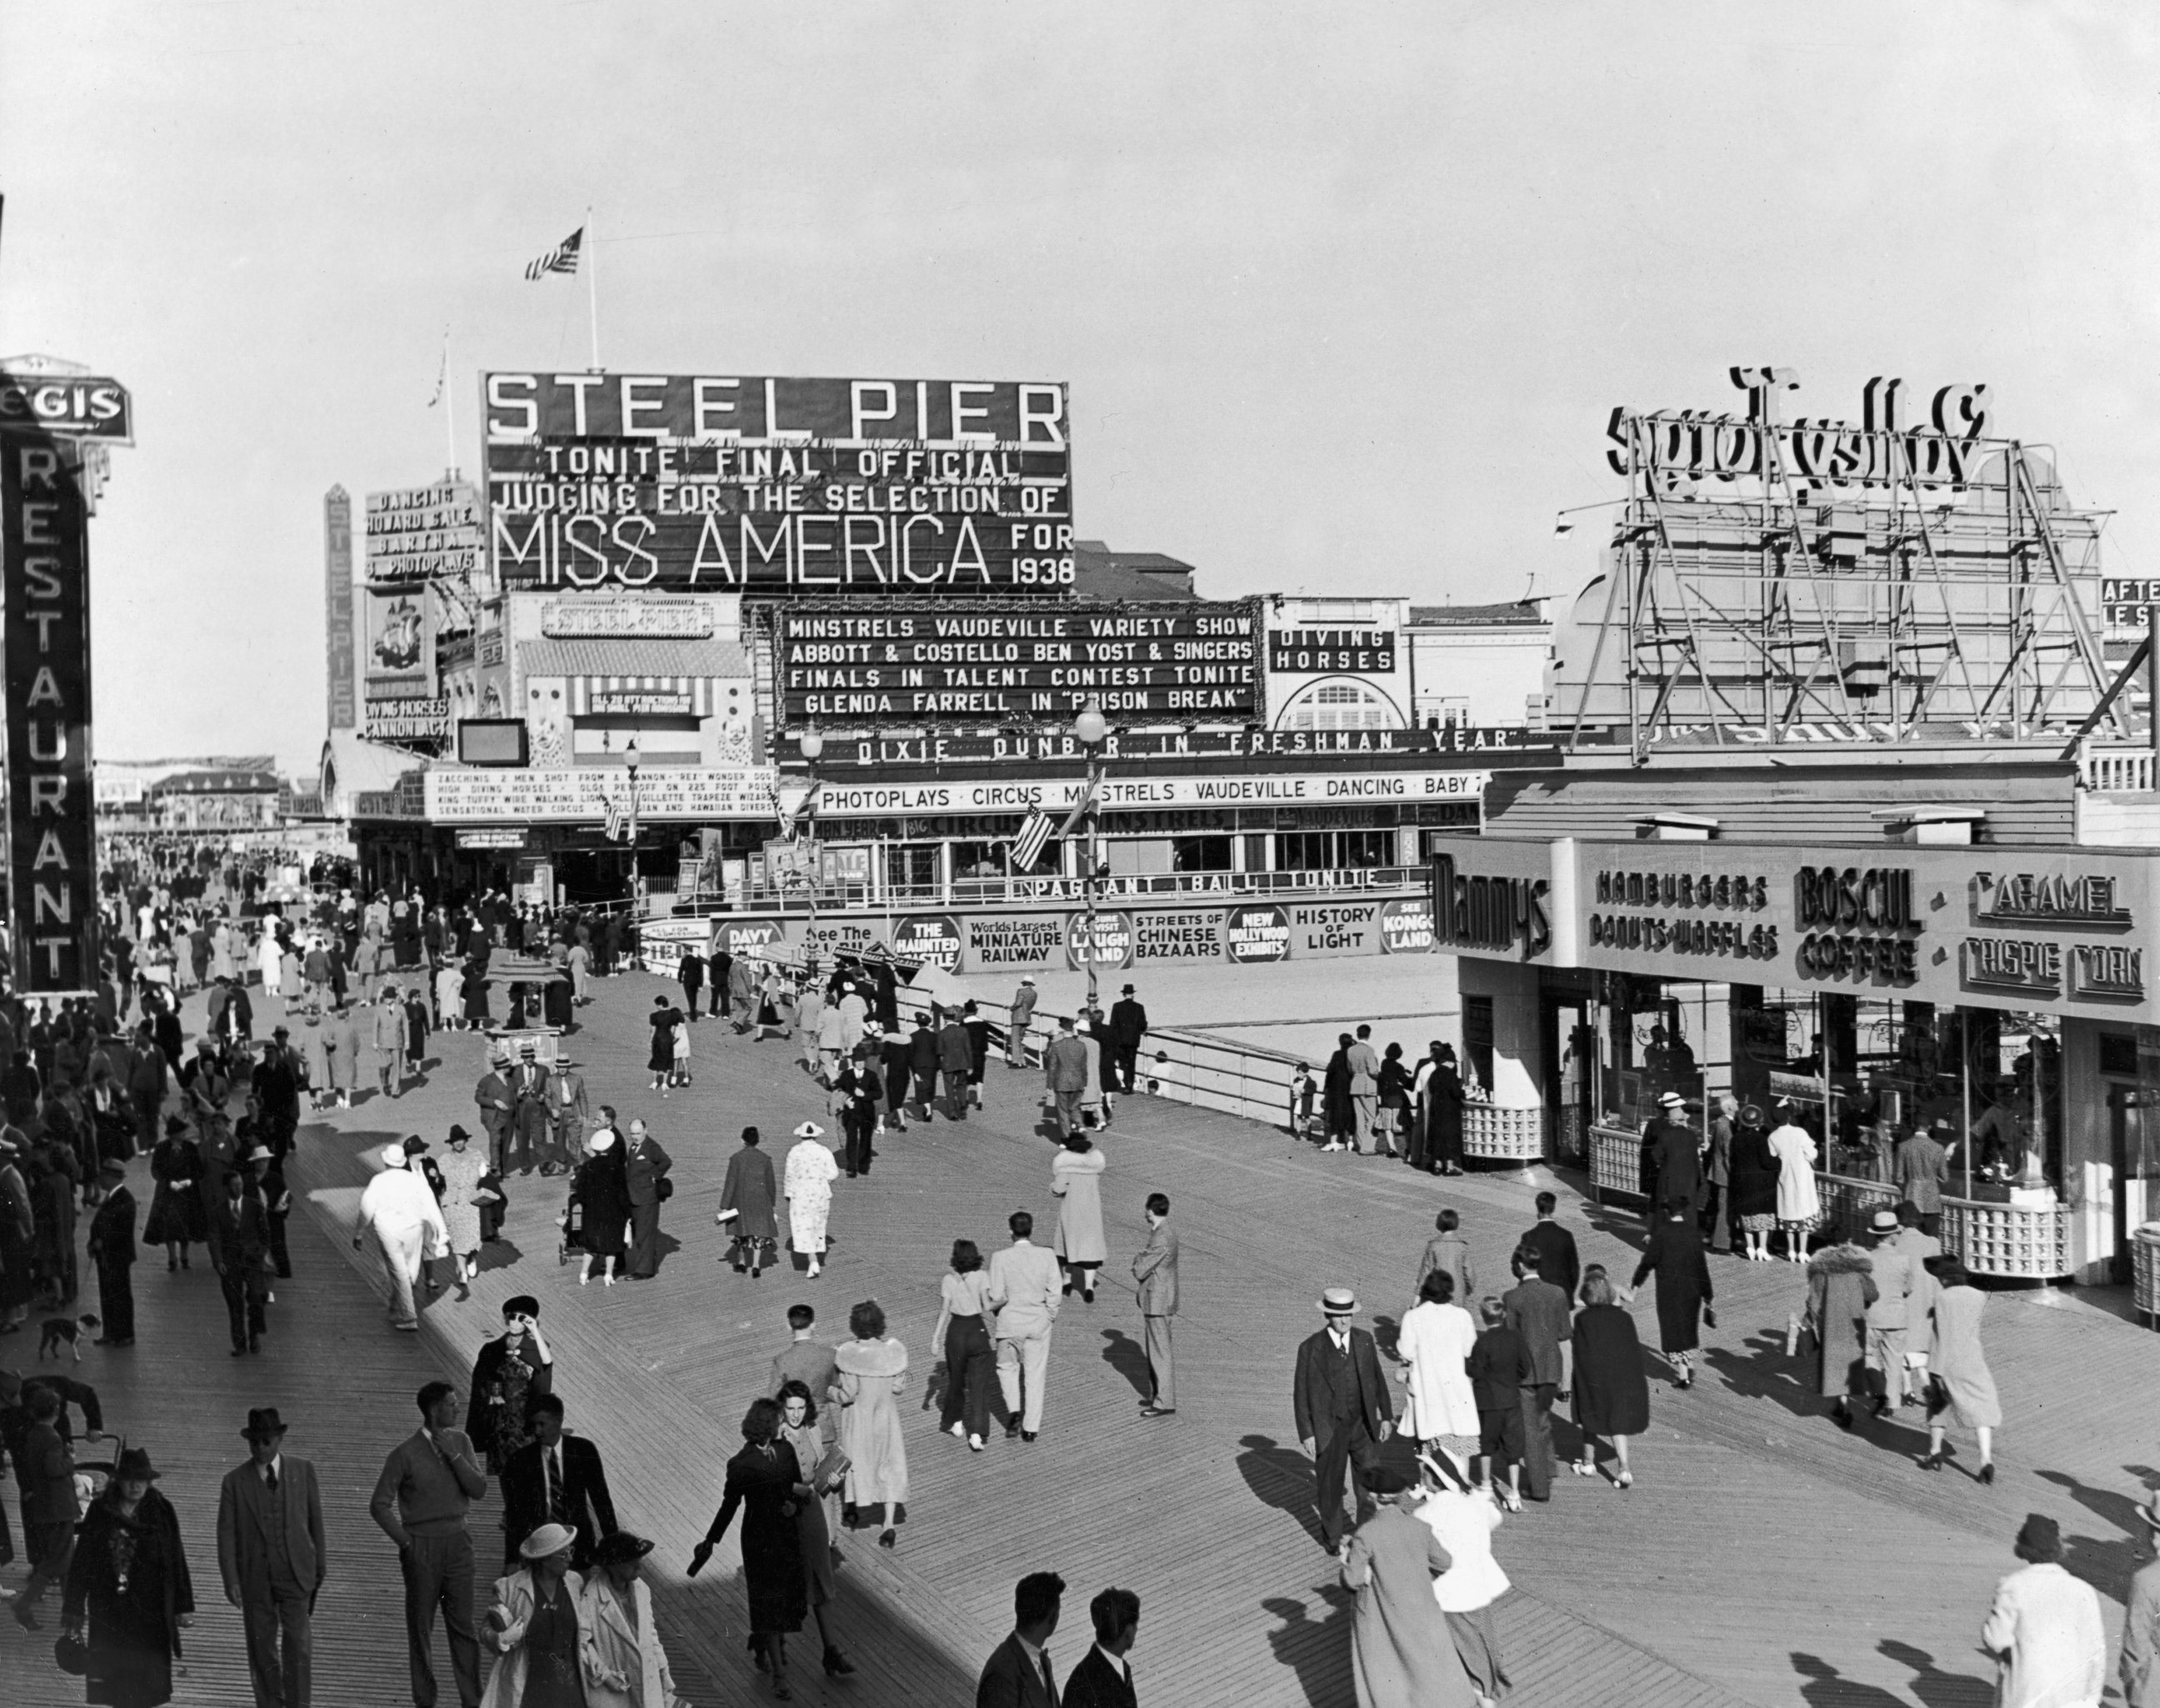 PHOTO: People walking on the boardwalk at Atlantic City, N.J., 1938.